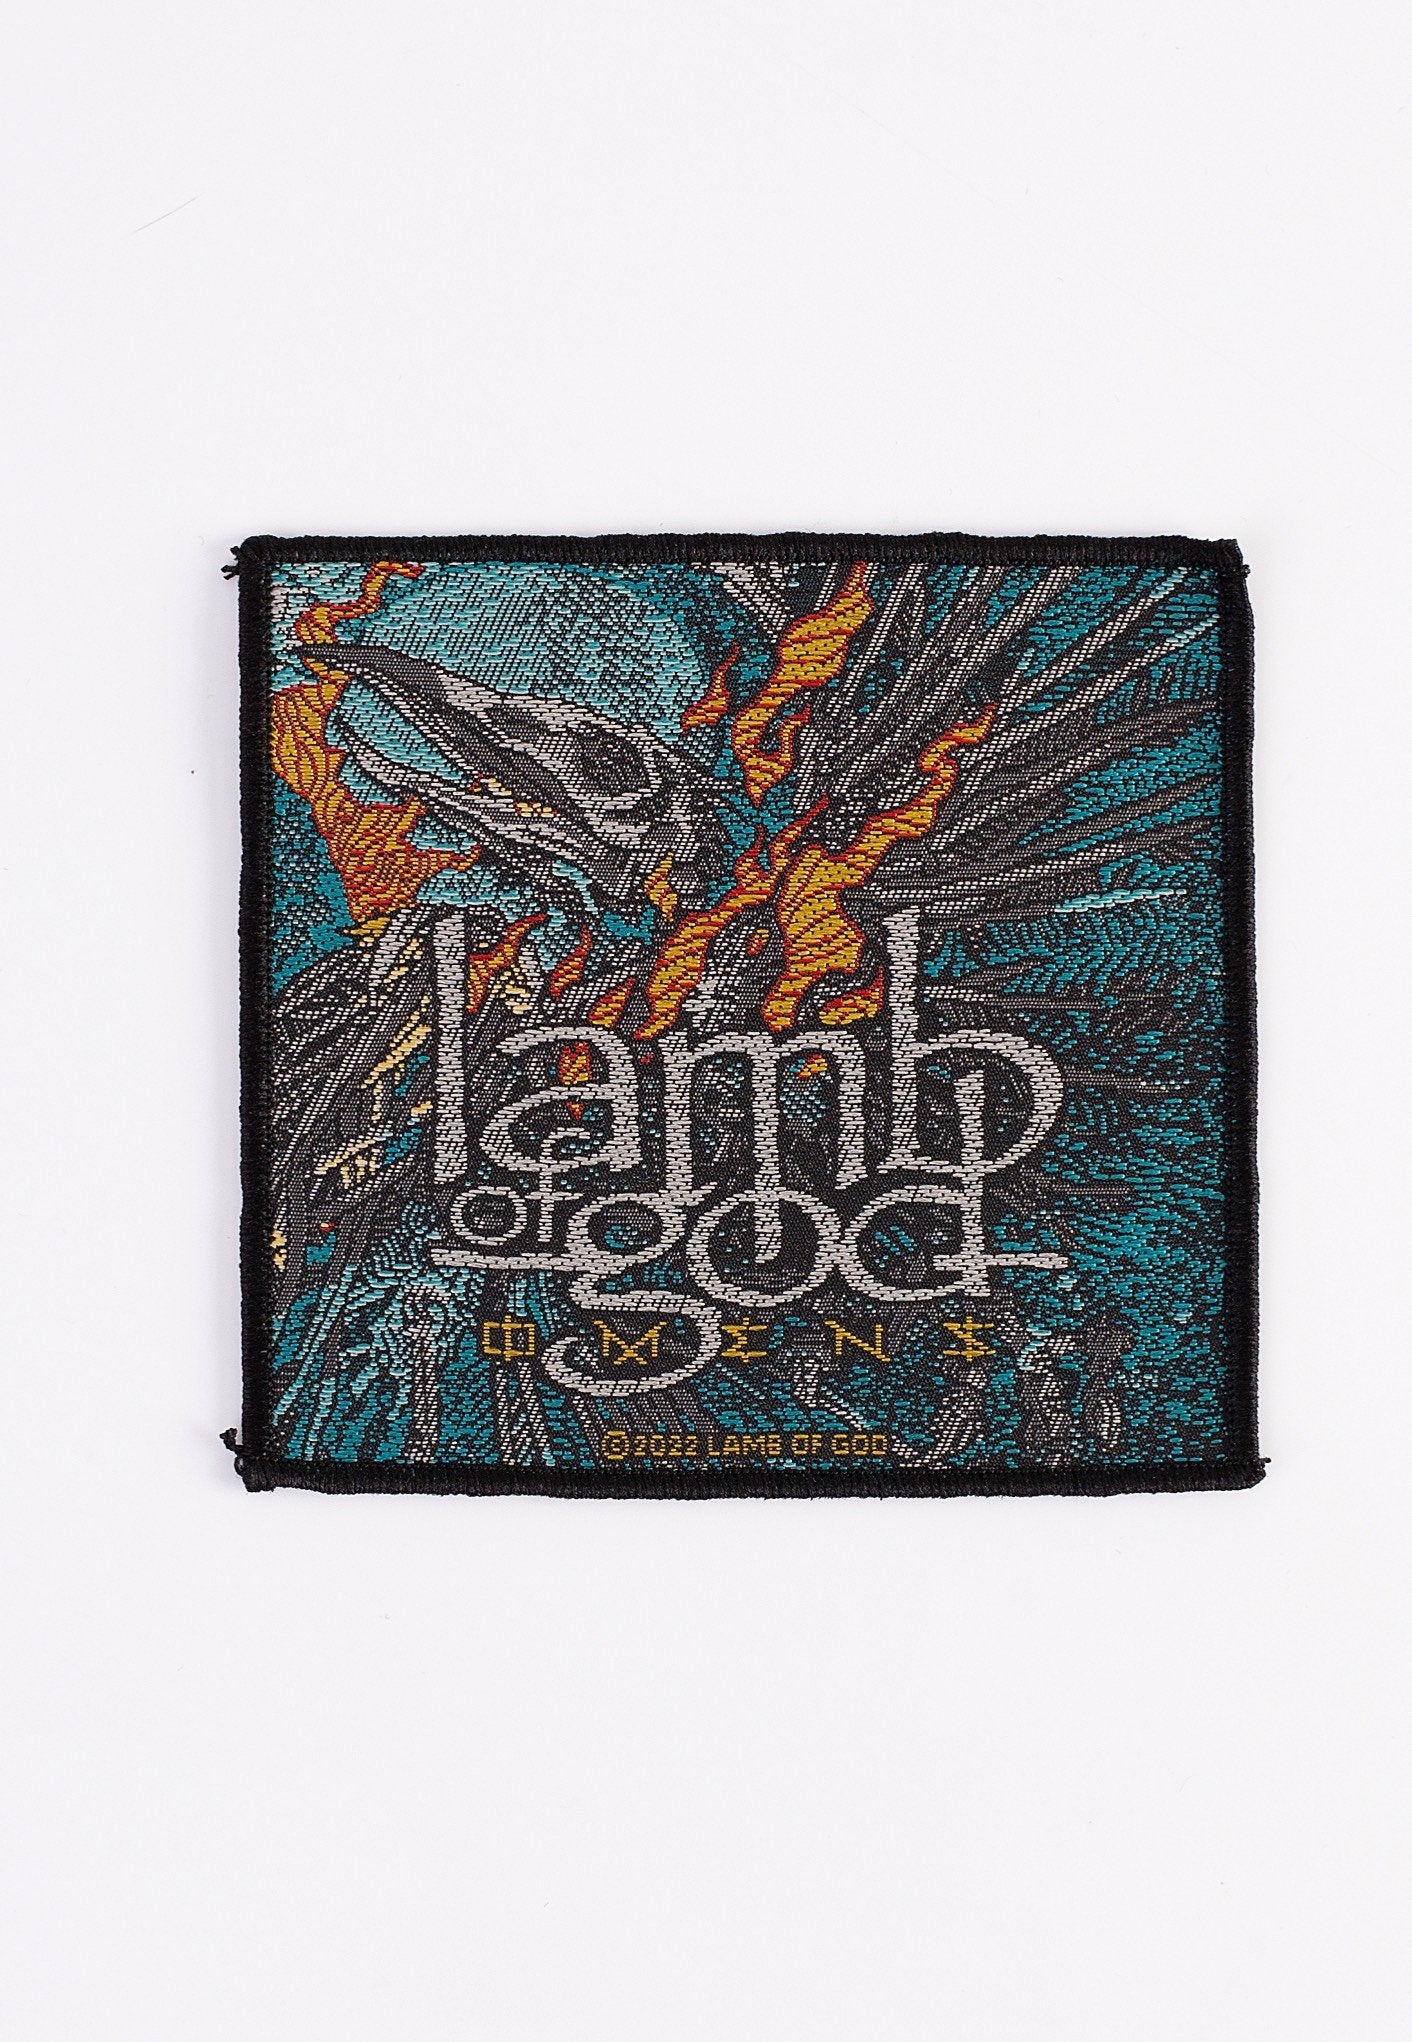 Lamb Of God - Omens - Patch